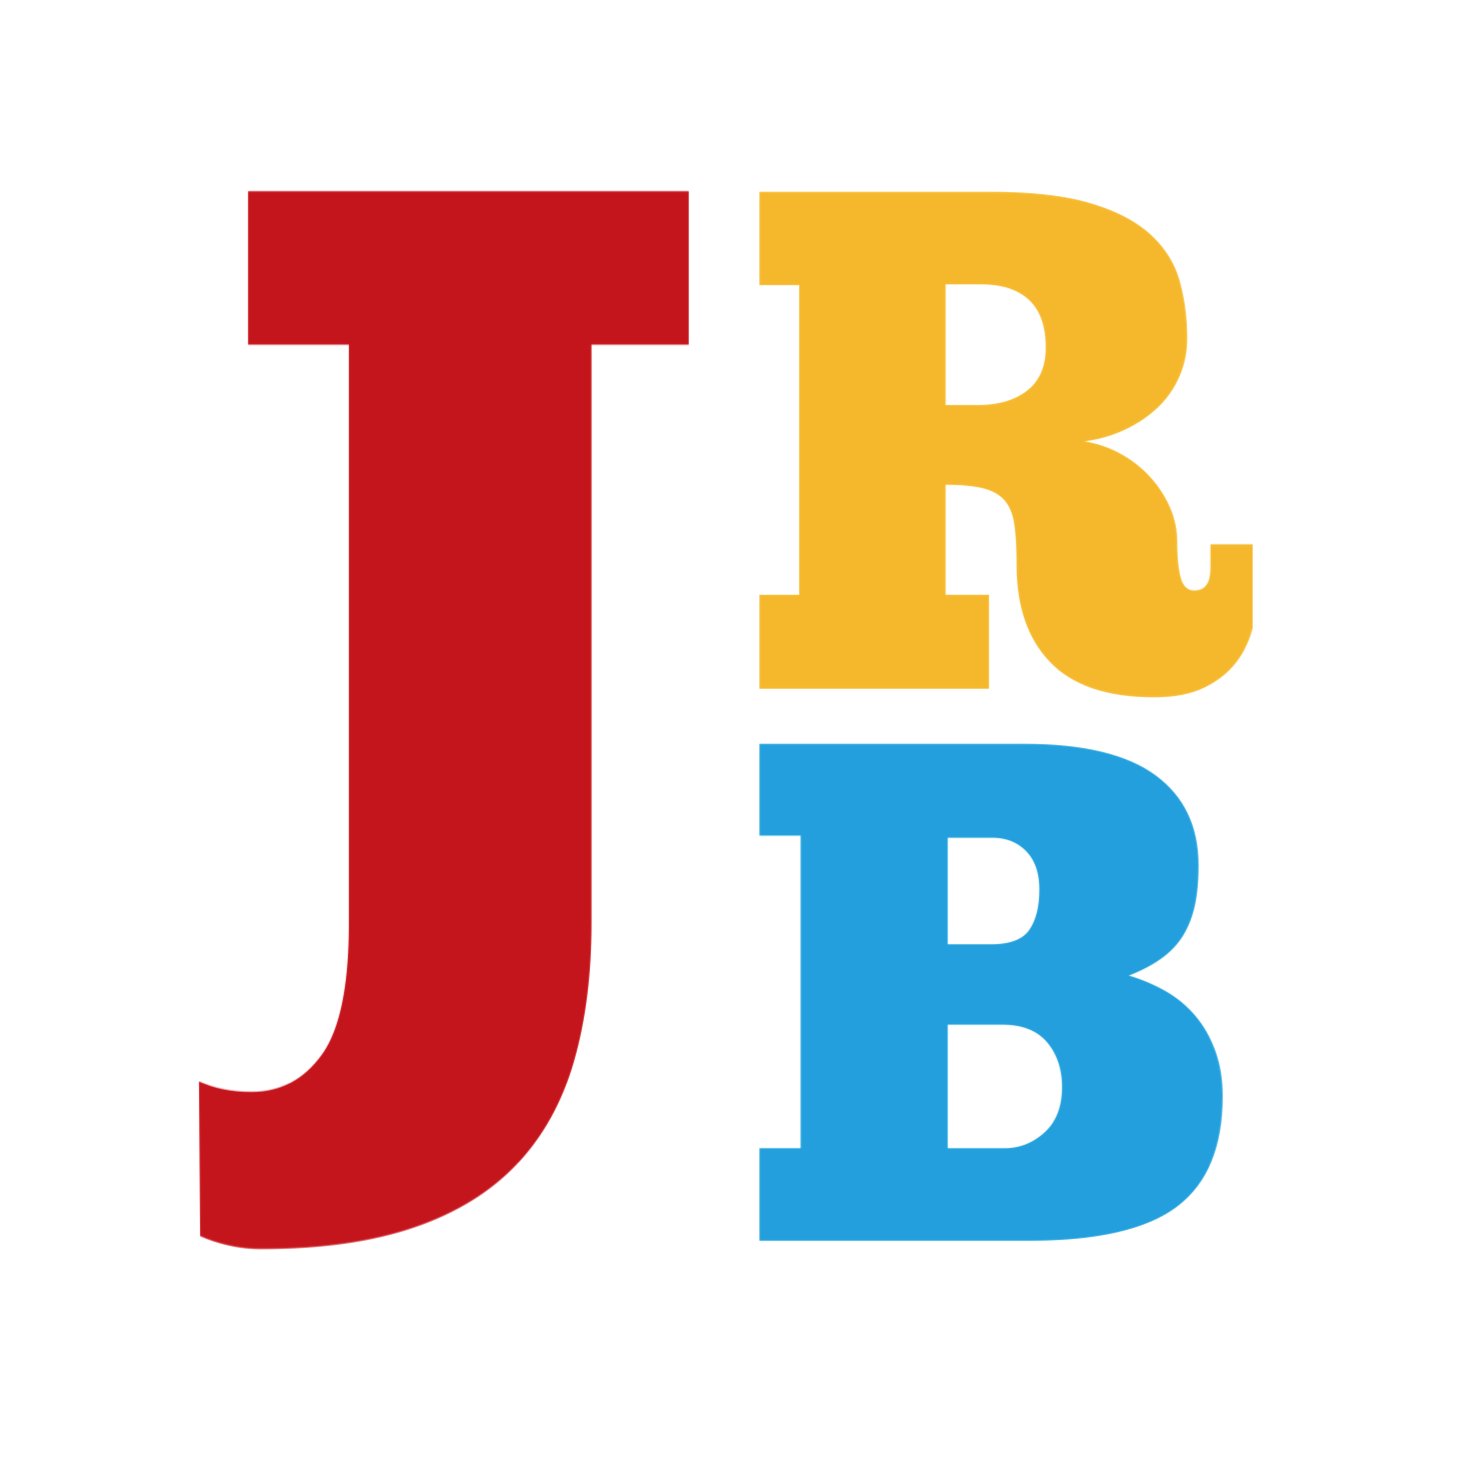 The JRB